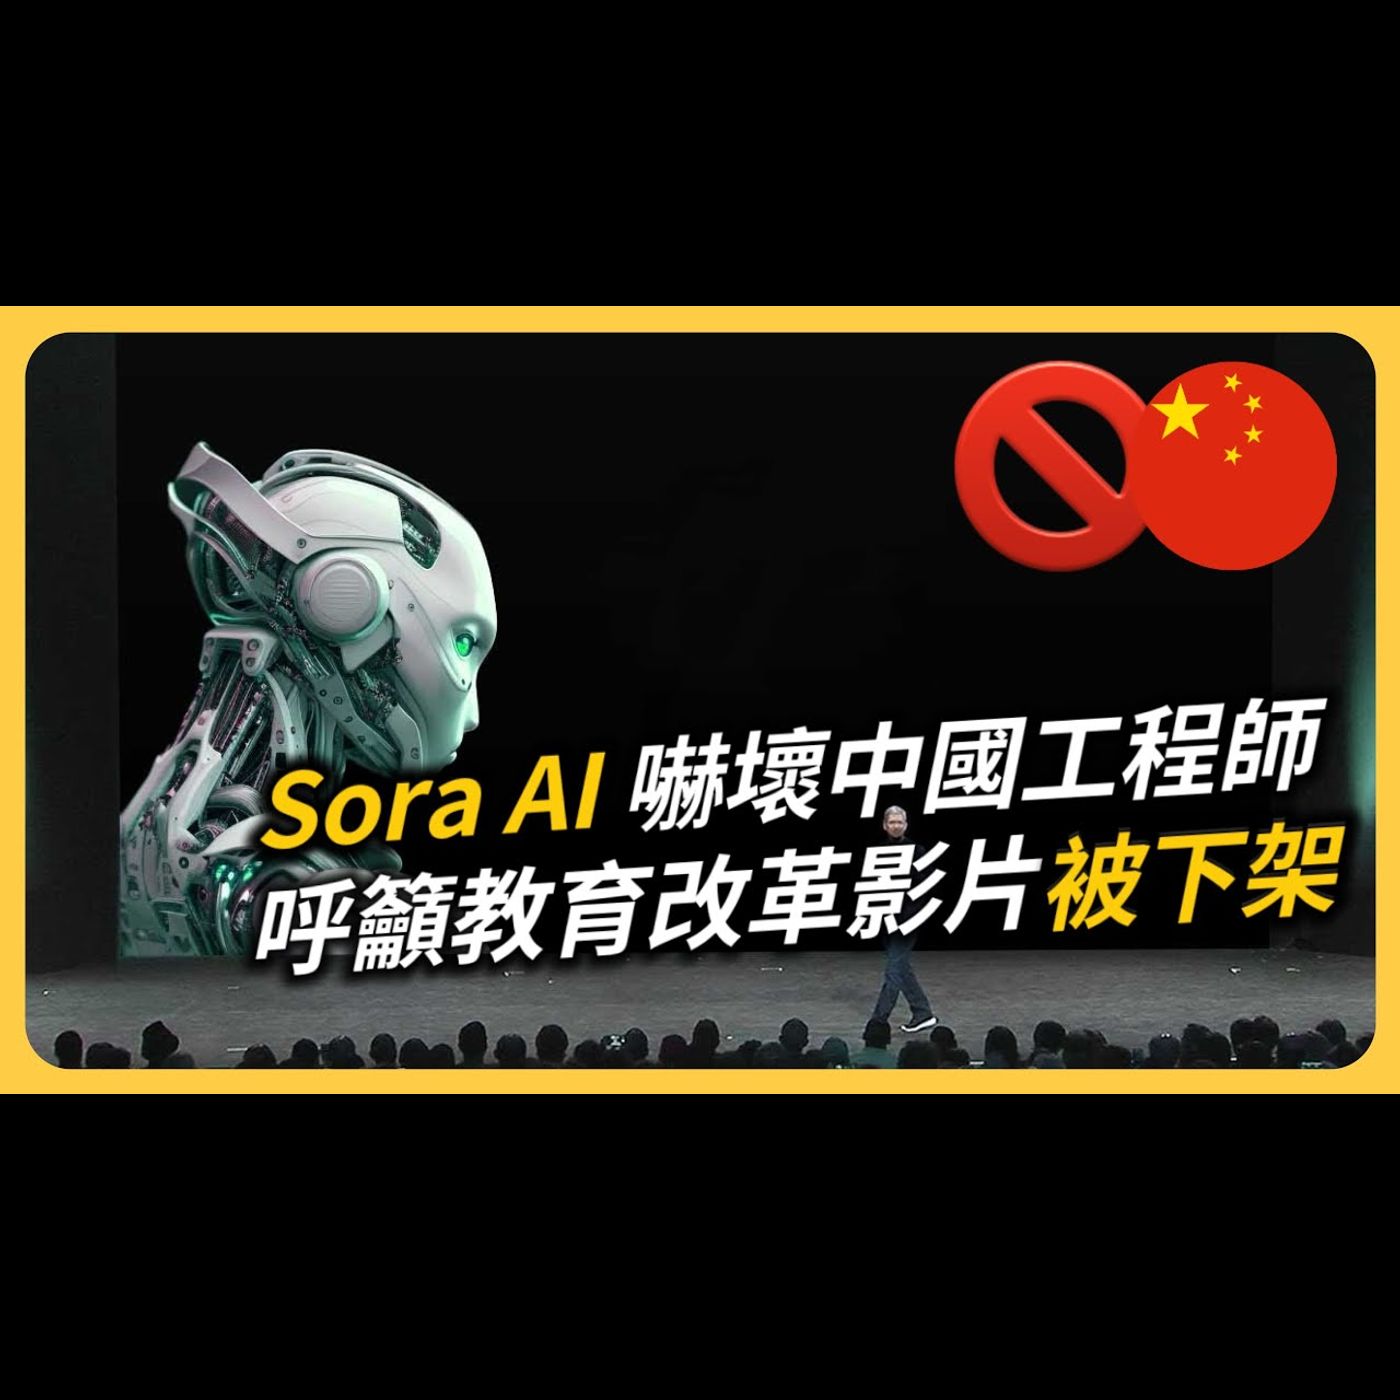 OpenAI Sora將改變你我這些！大陸工程師被嚇傻呼籲中國教育改革⋯影片慘遭下架！只因他說了XX⋯⋯